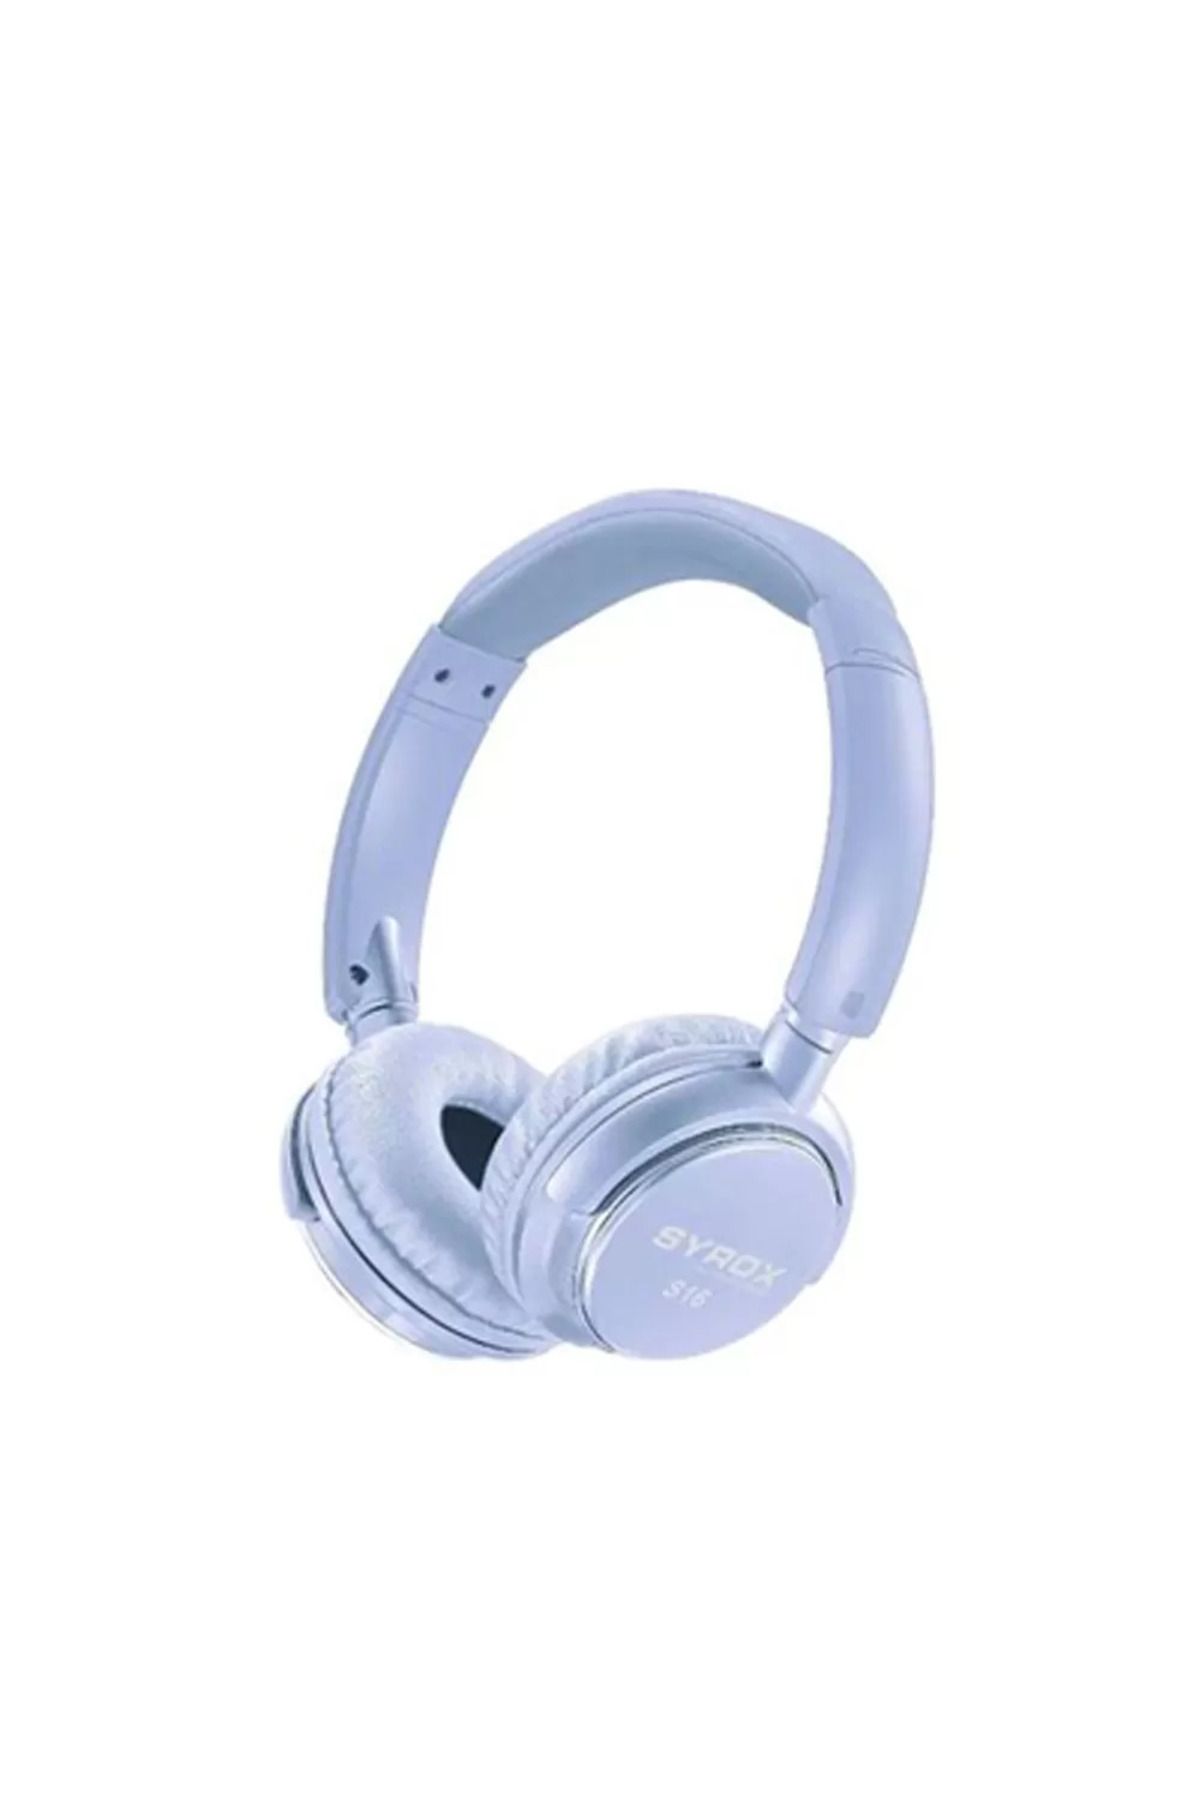 Syrox Syx-S16 Kulaküstü Bluetooth Kulaklık